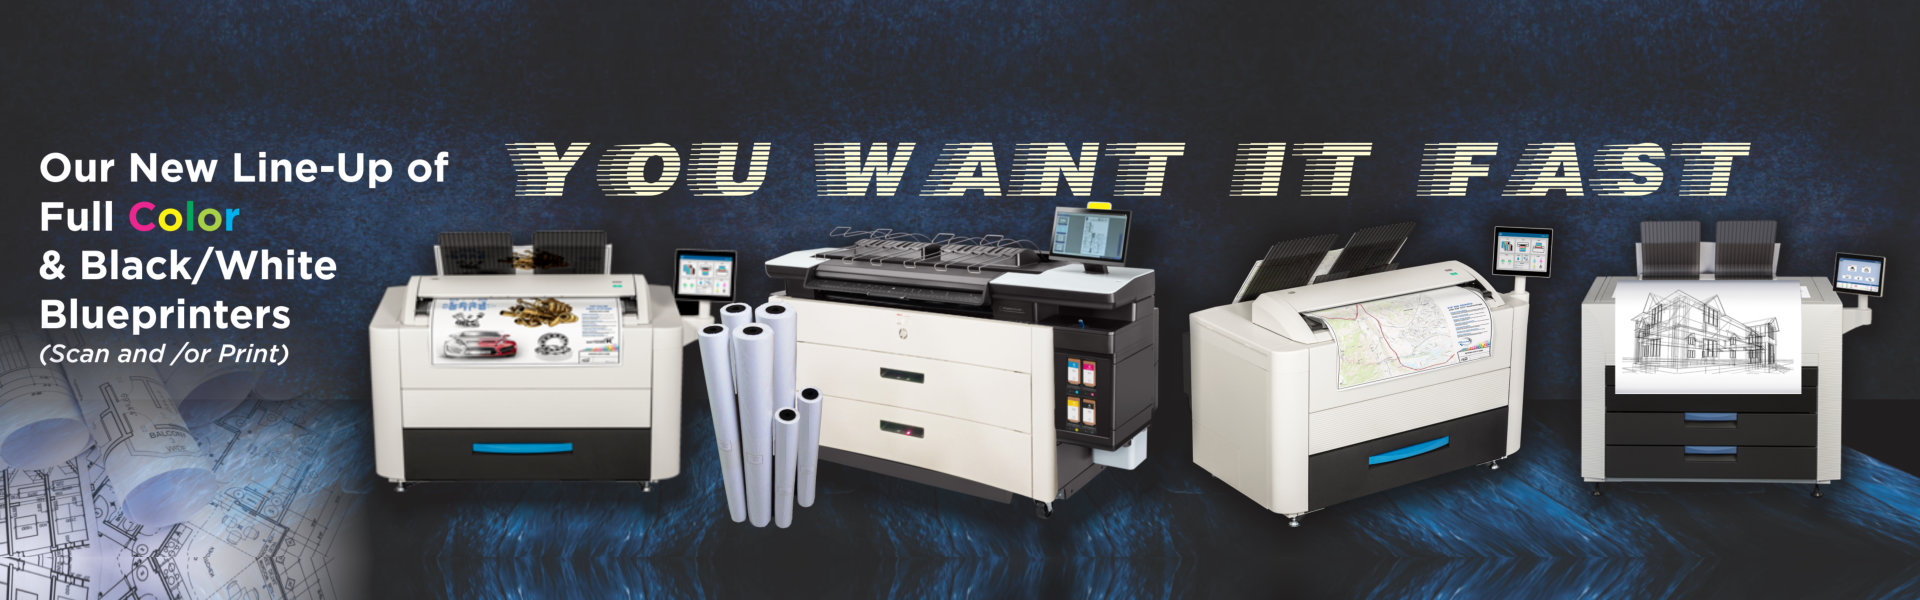 four printers